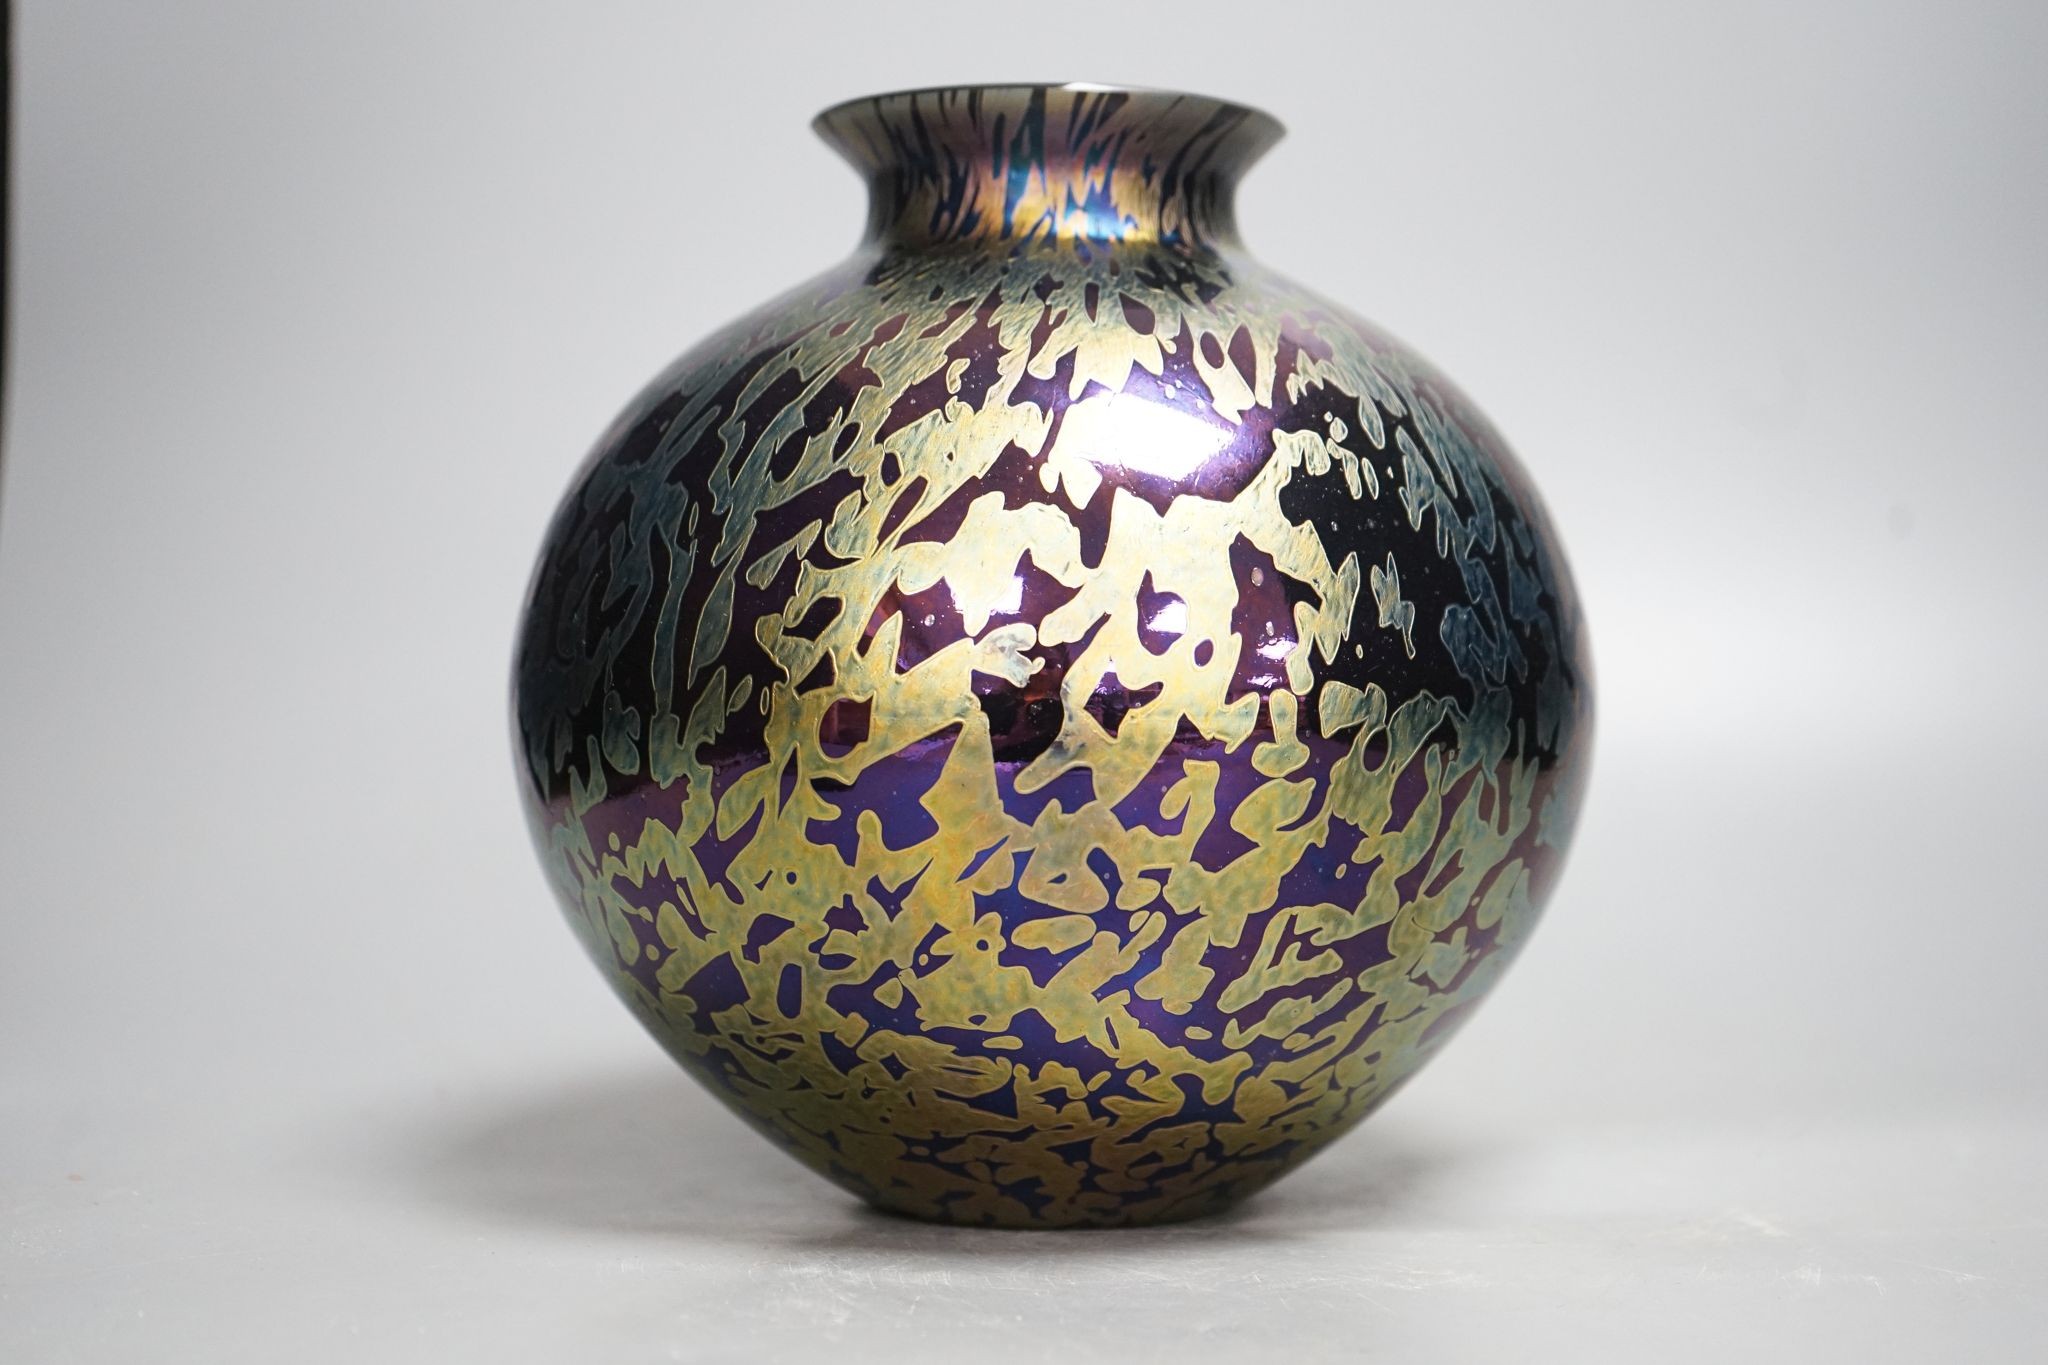 A Royal Brierley studio glass vase, 20cm